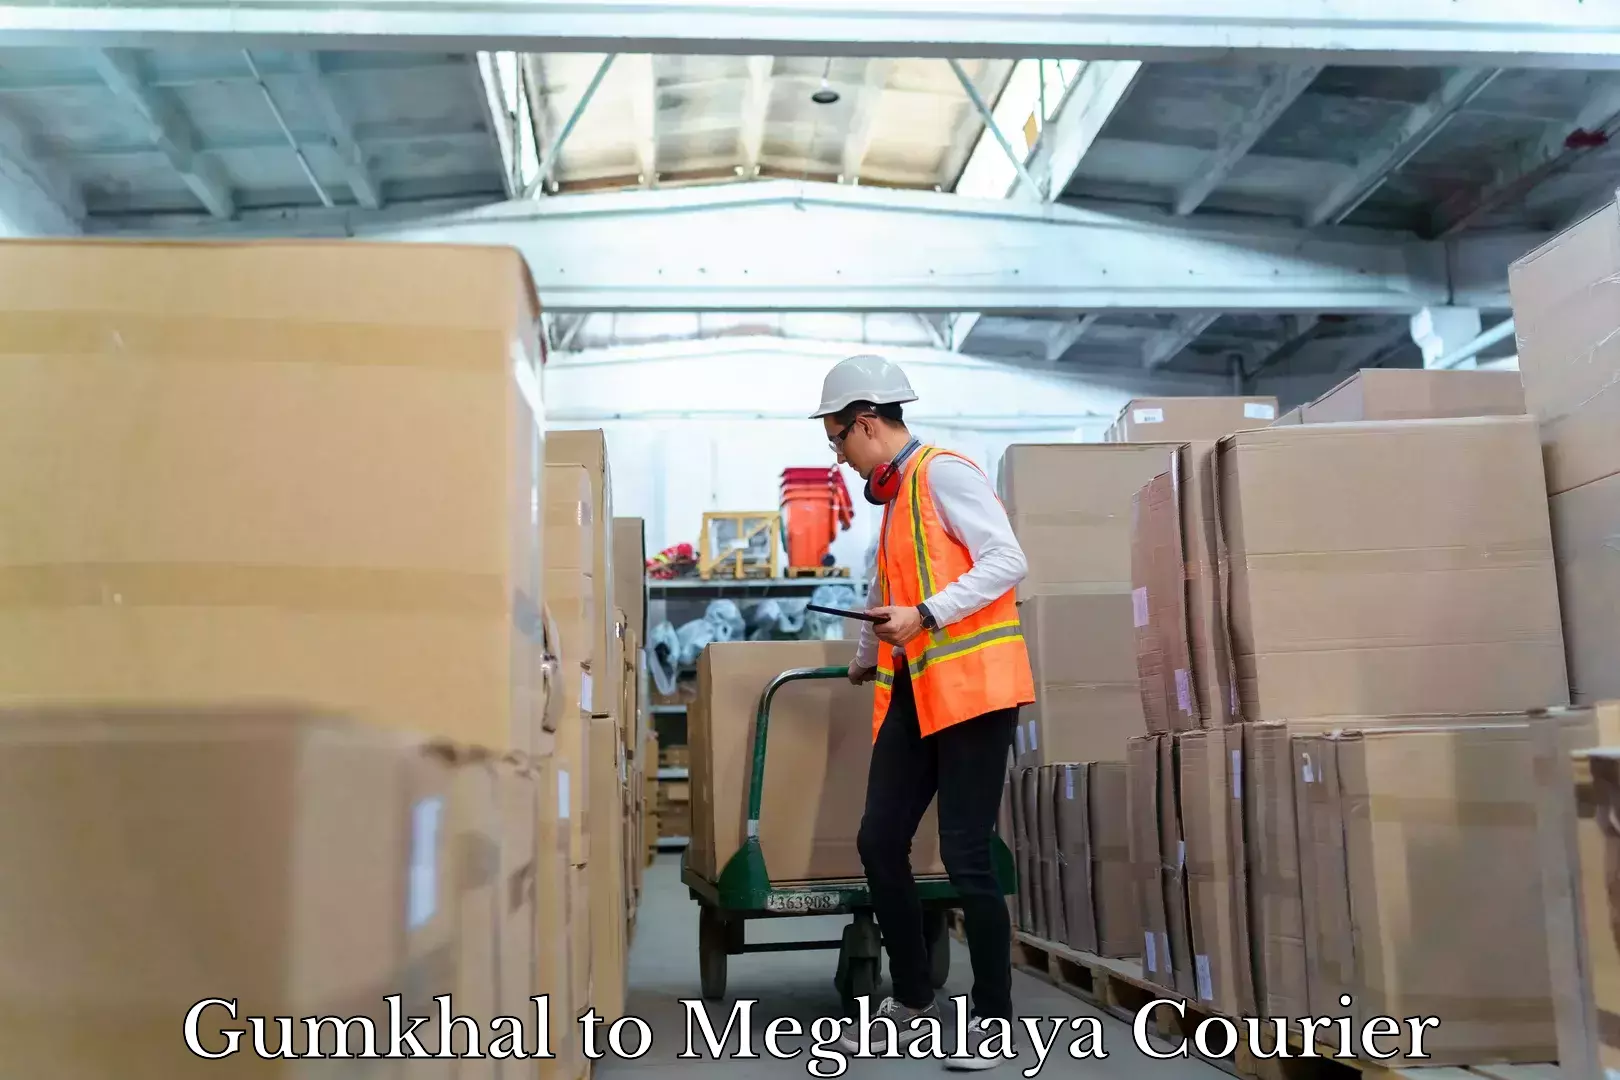 Courier service partnerships Gumkhal to Meghalaya